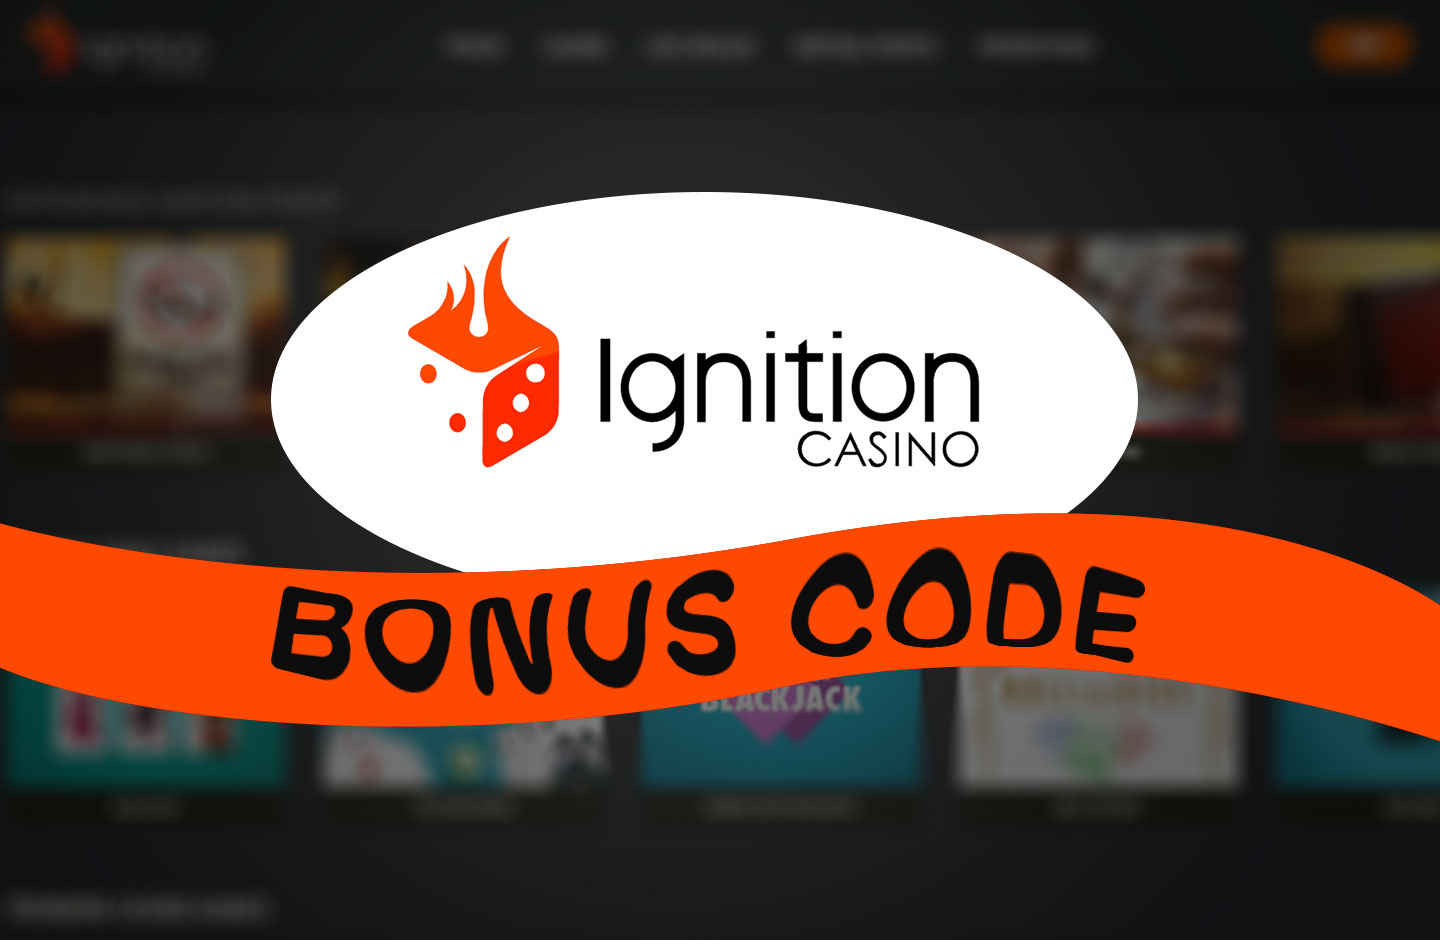 ignition casino welcome bonus code